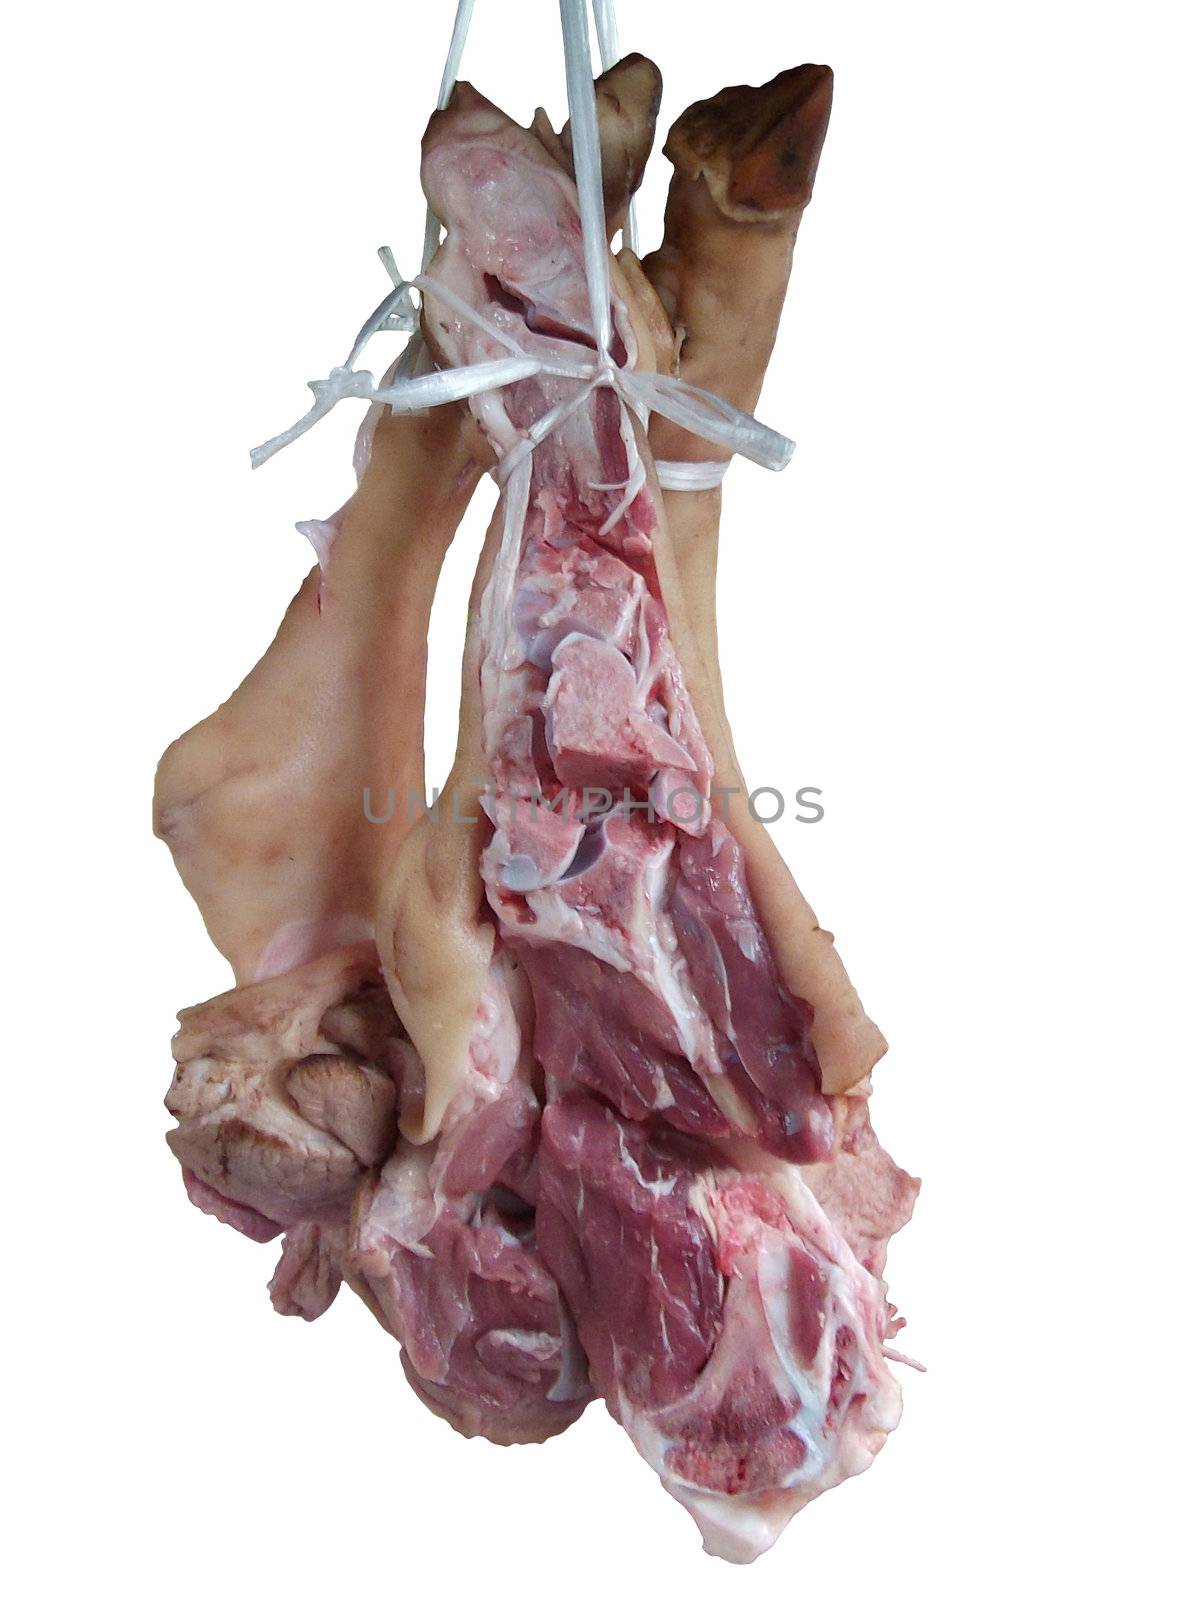 Legs of pork by olovedog